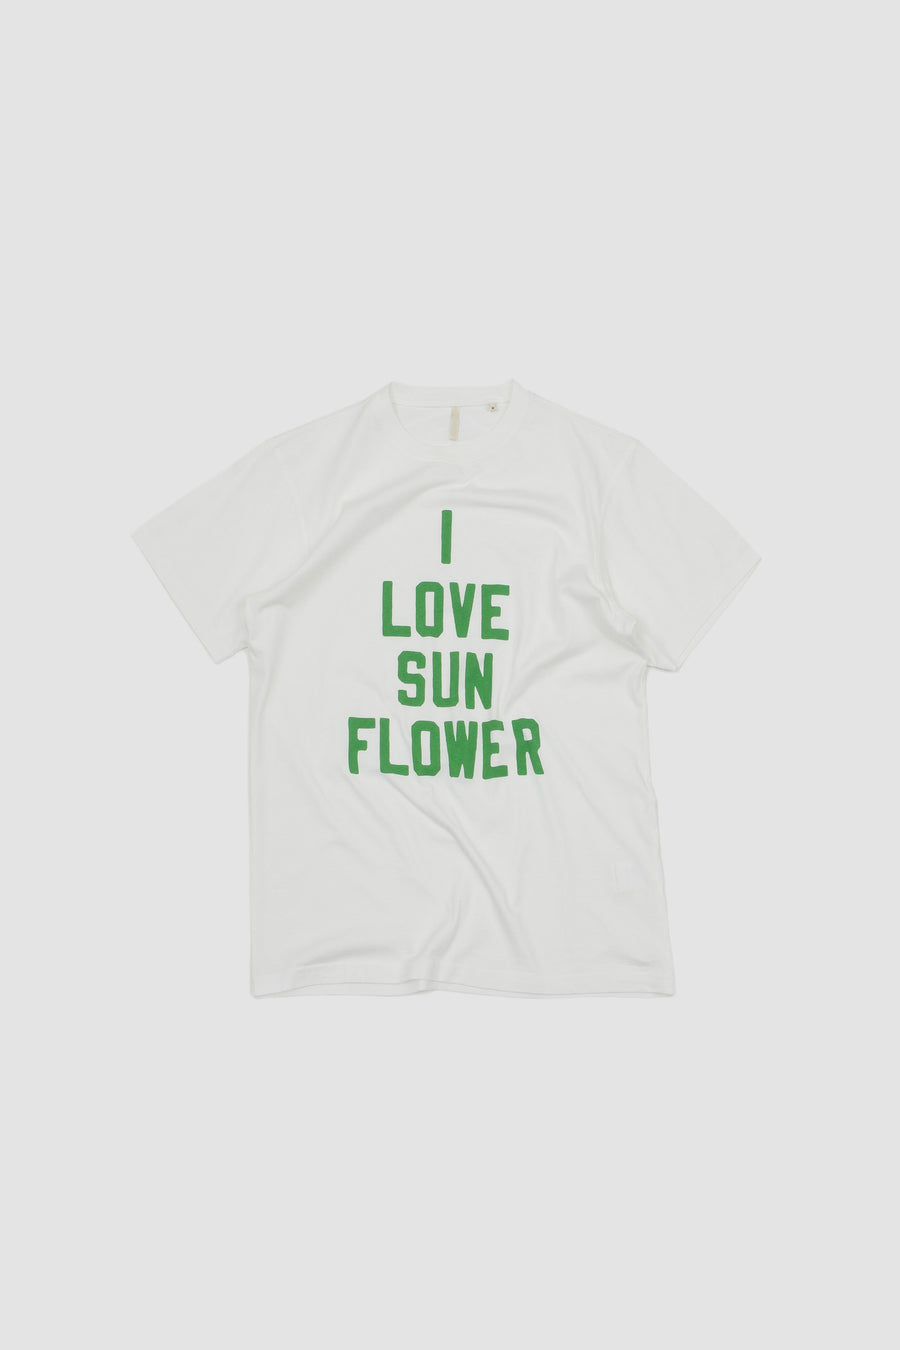 SPORTIVO [Shop, Sunflower]